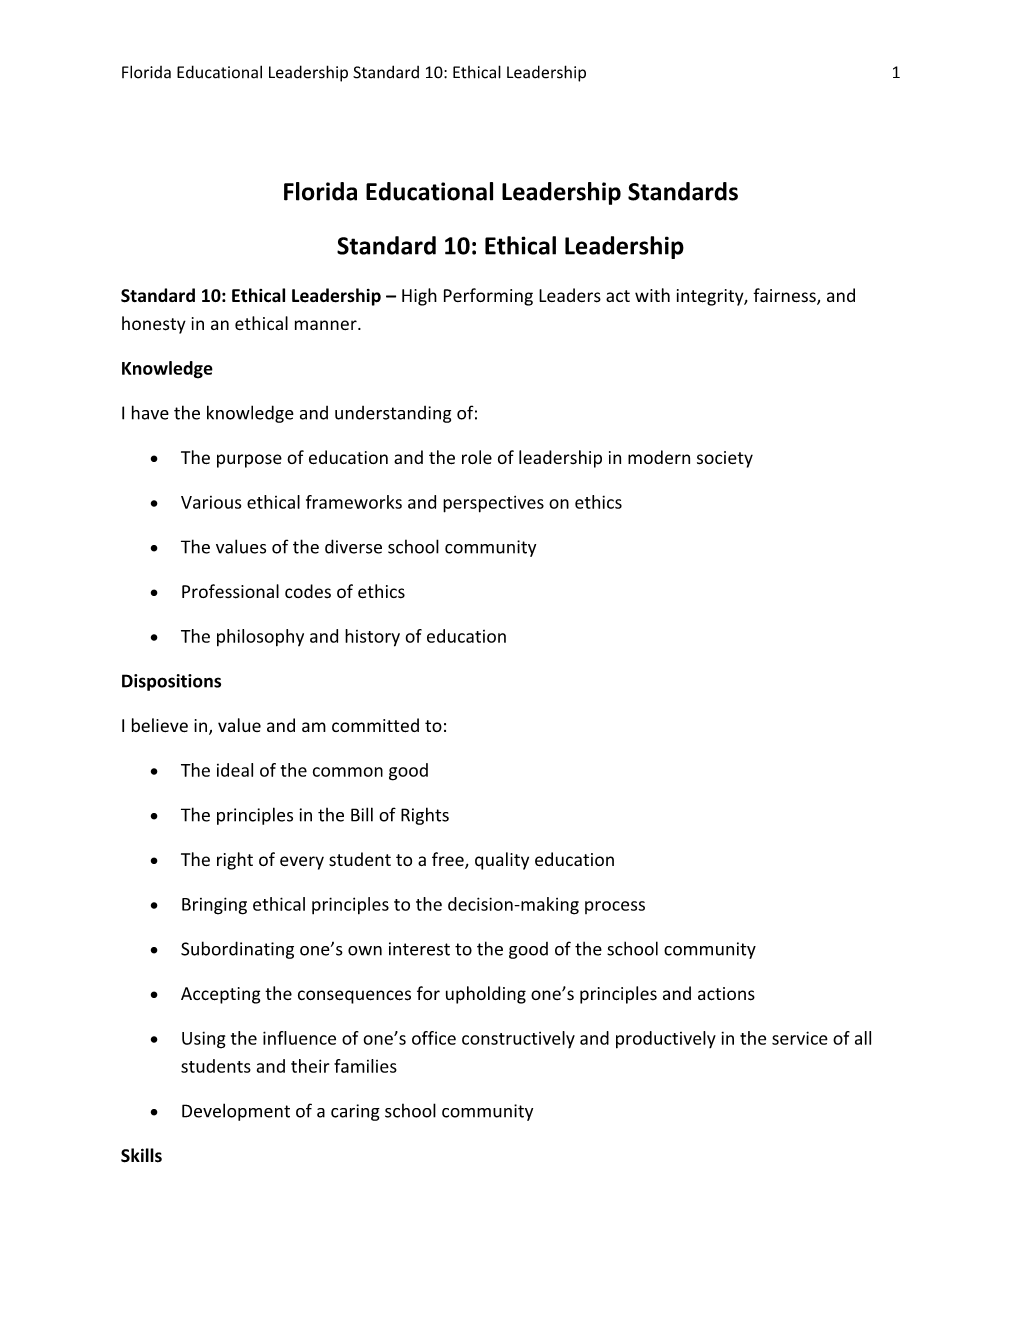 Florida Educational Leadership Standards